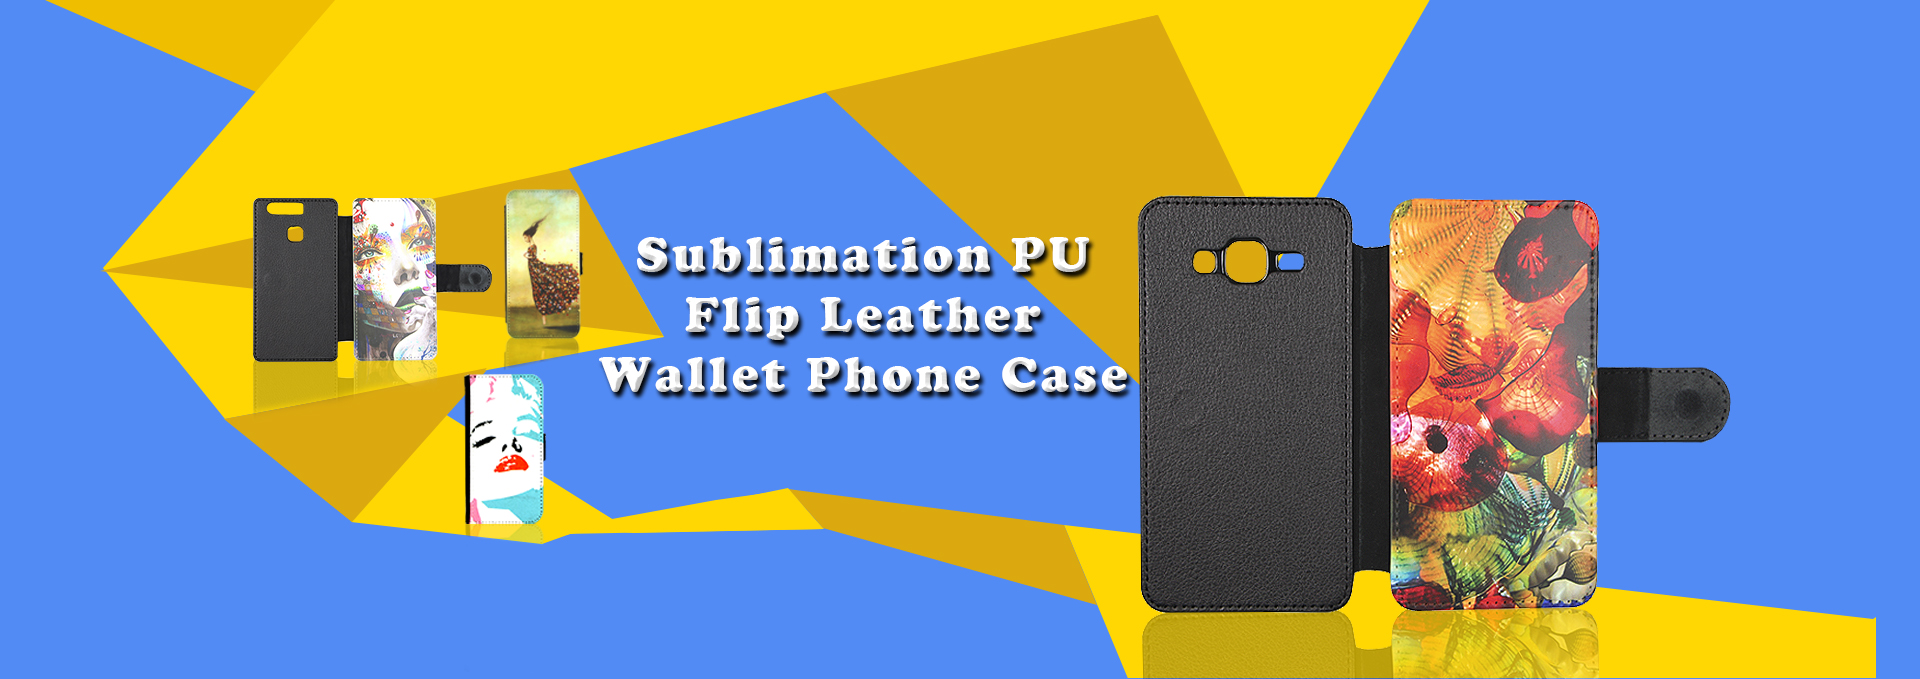 Sublimation Leather Wallet Mobile Phone Case